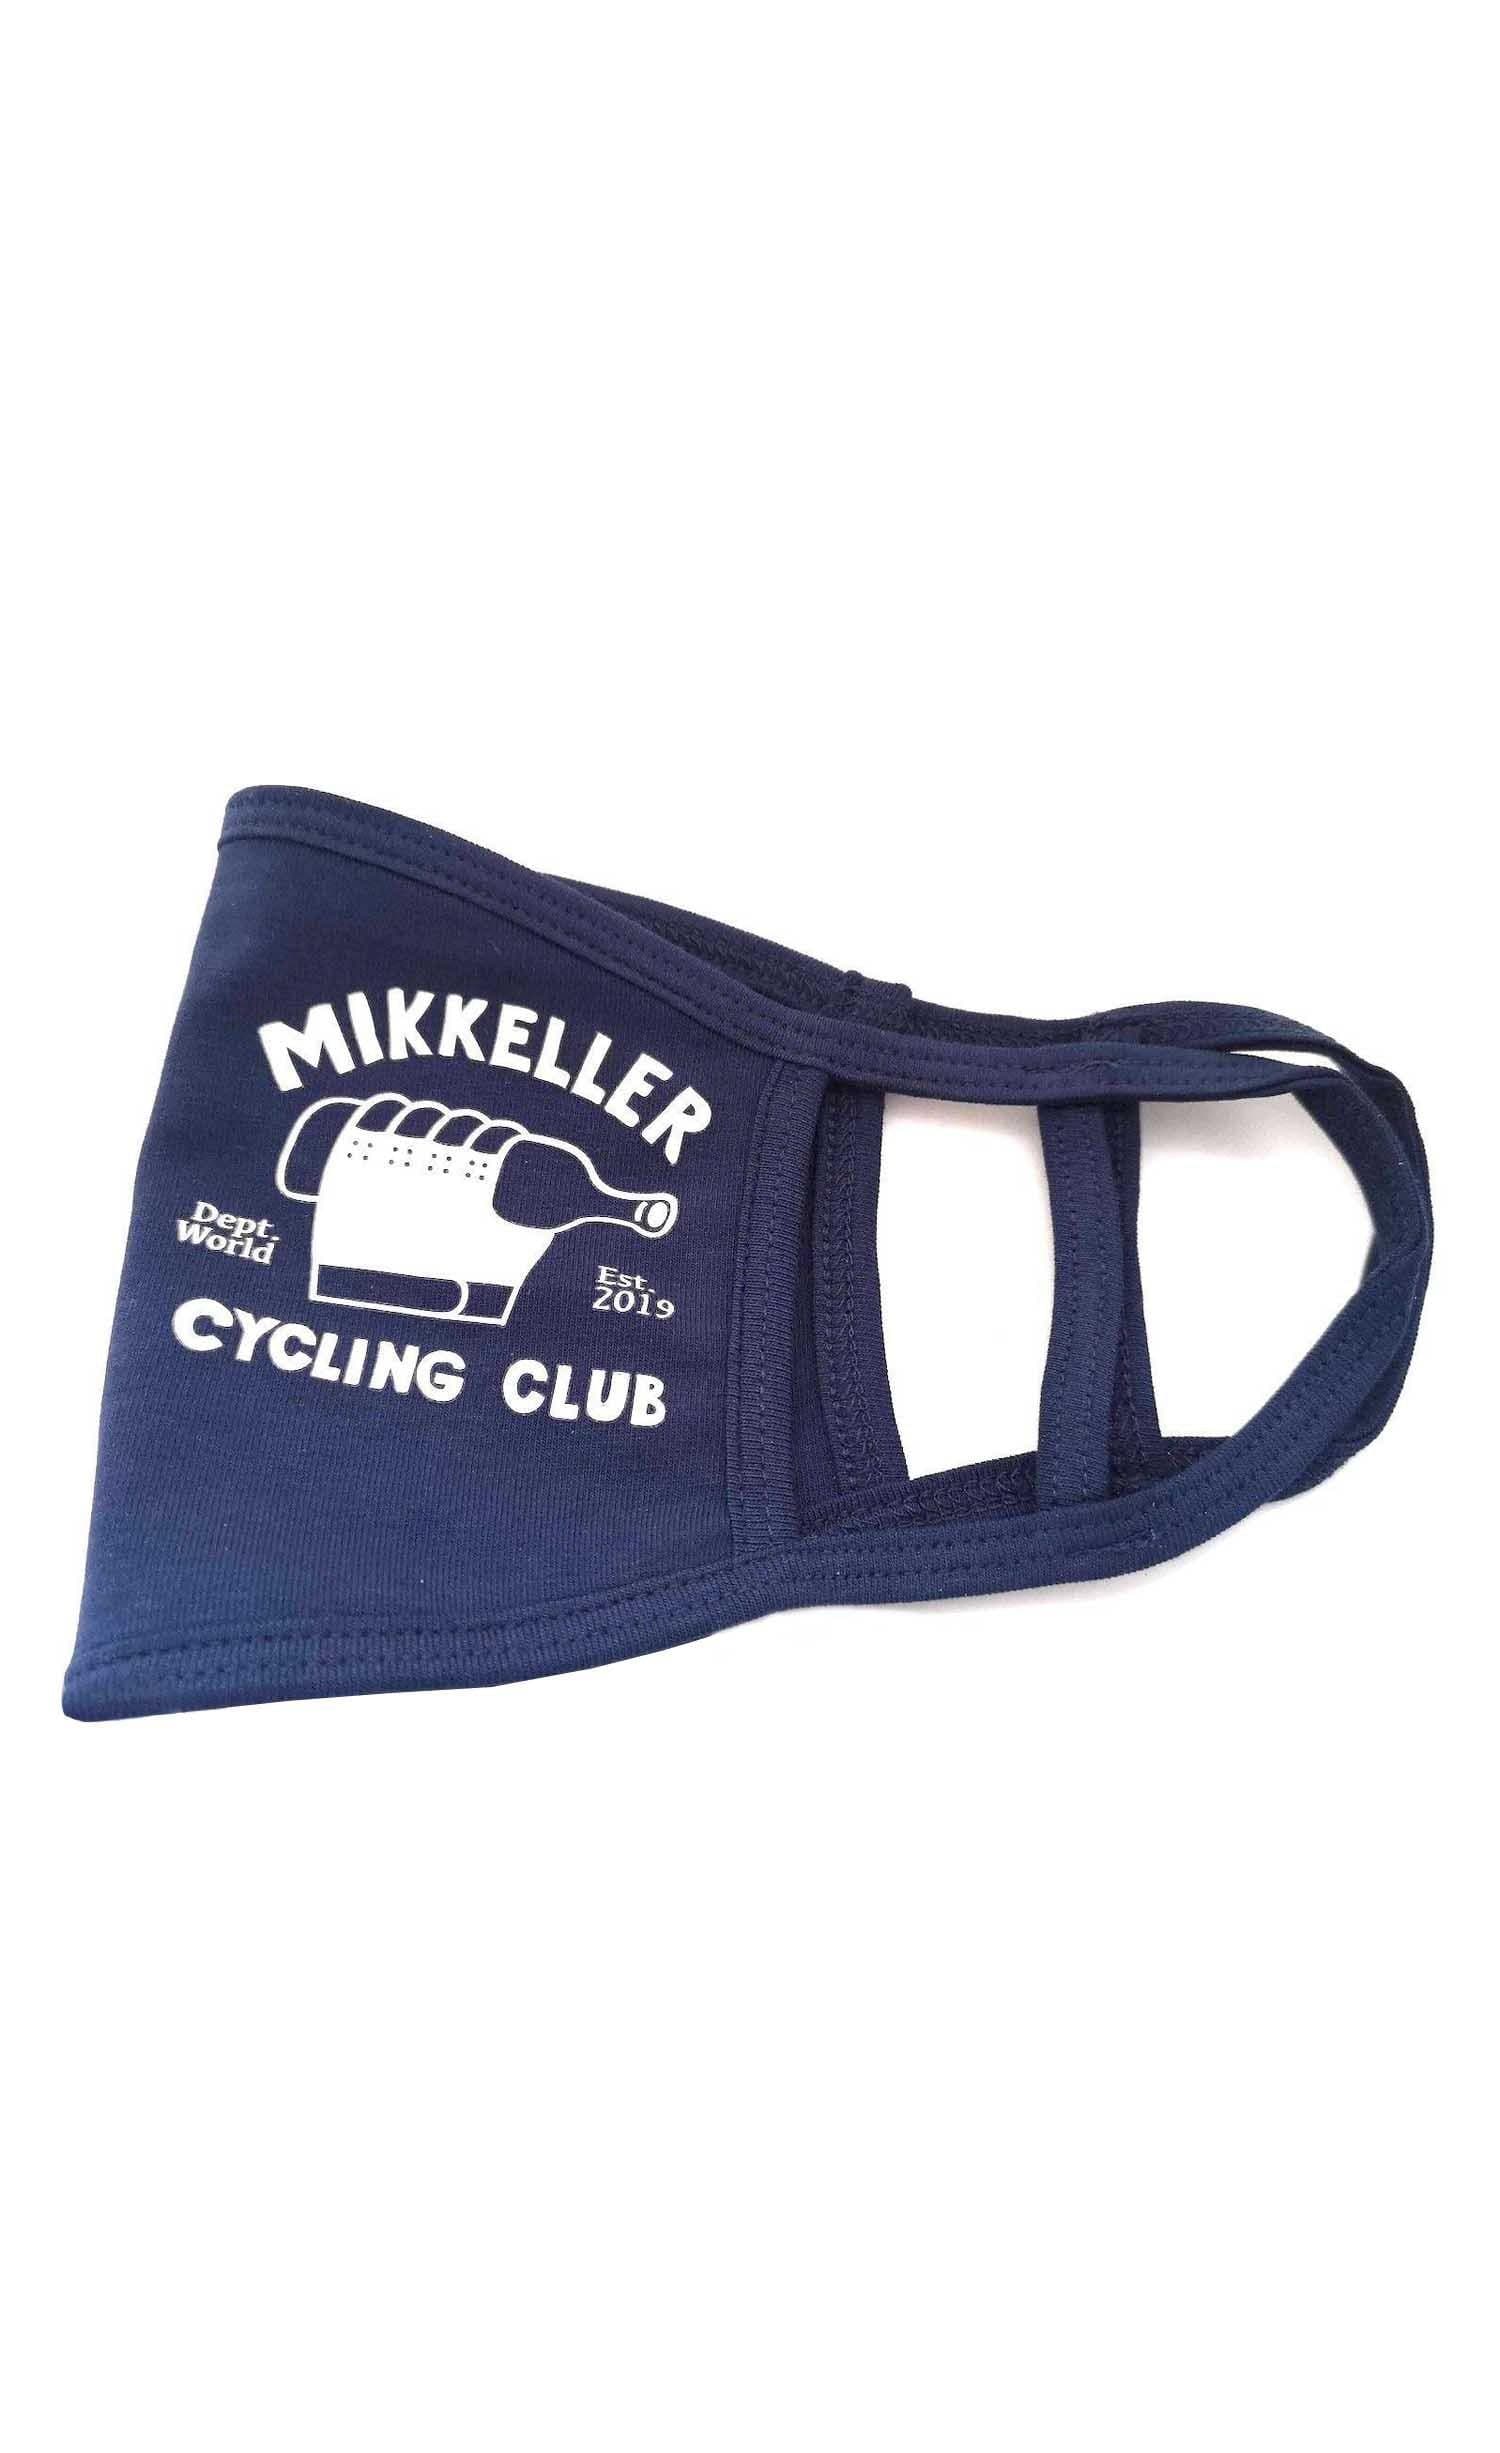 Mikkeller Cycling Club MCC Gear Mikkeller Cycling Club Face Mask